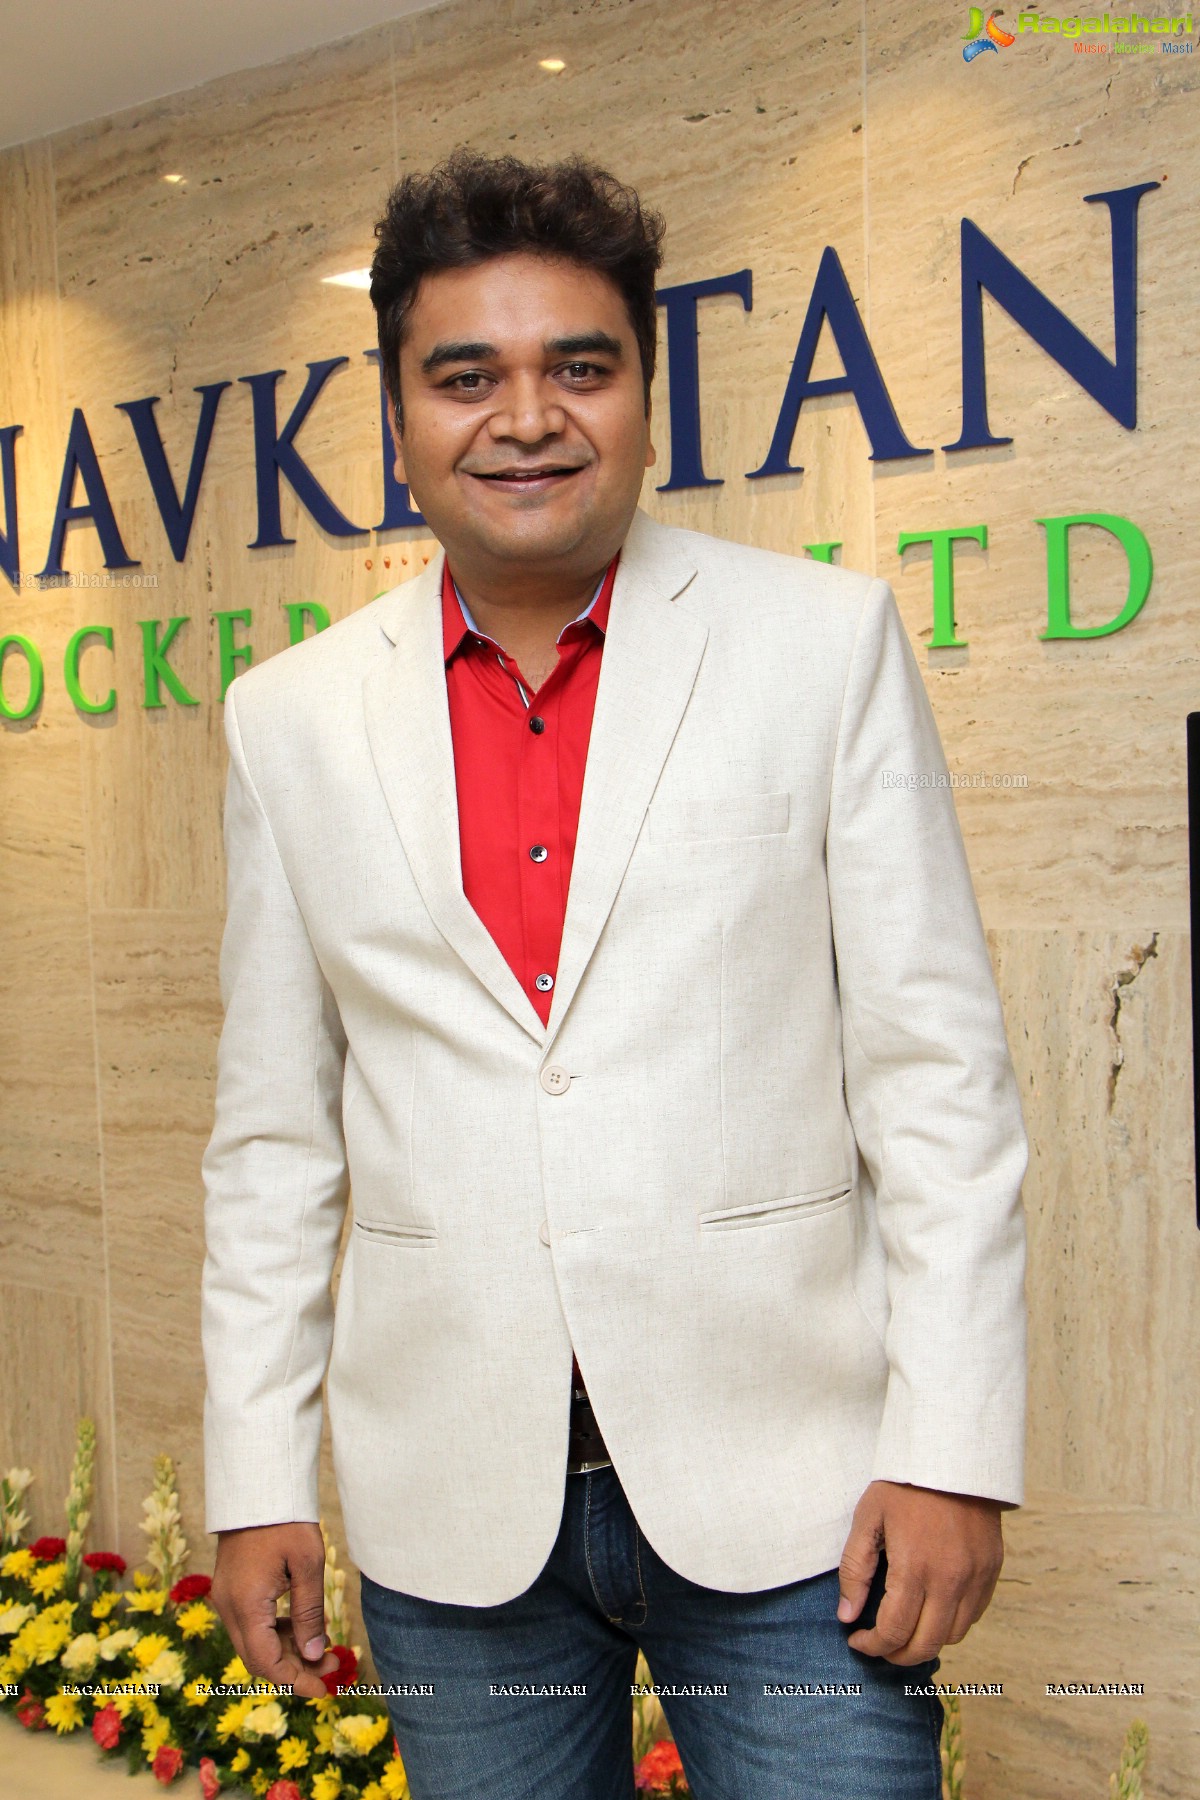 Pinky Reddy launches Navkettan Lockers Pvt. Ltd. in Hyderabad